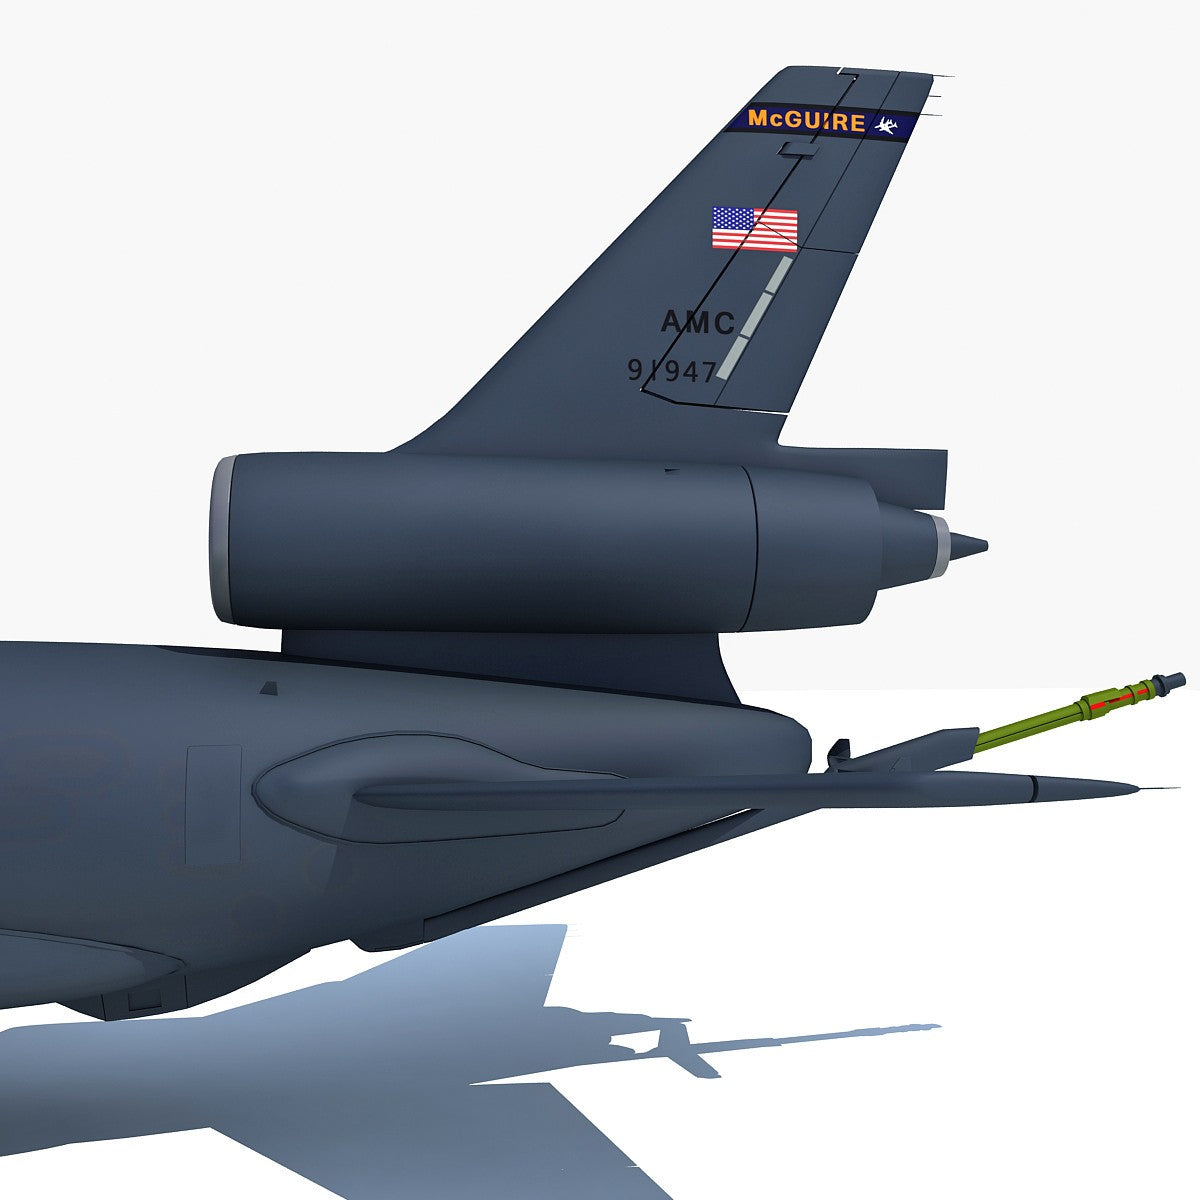 3D Military Aircraft Models